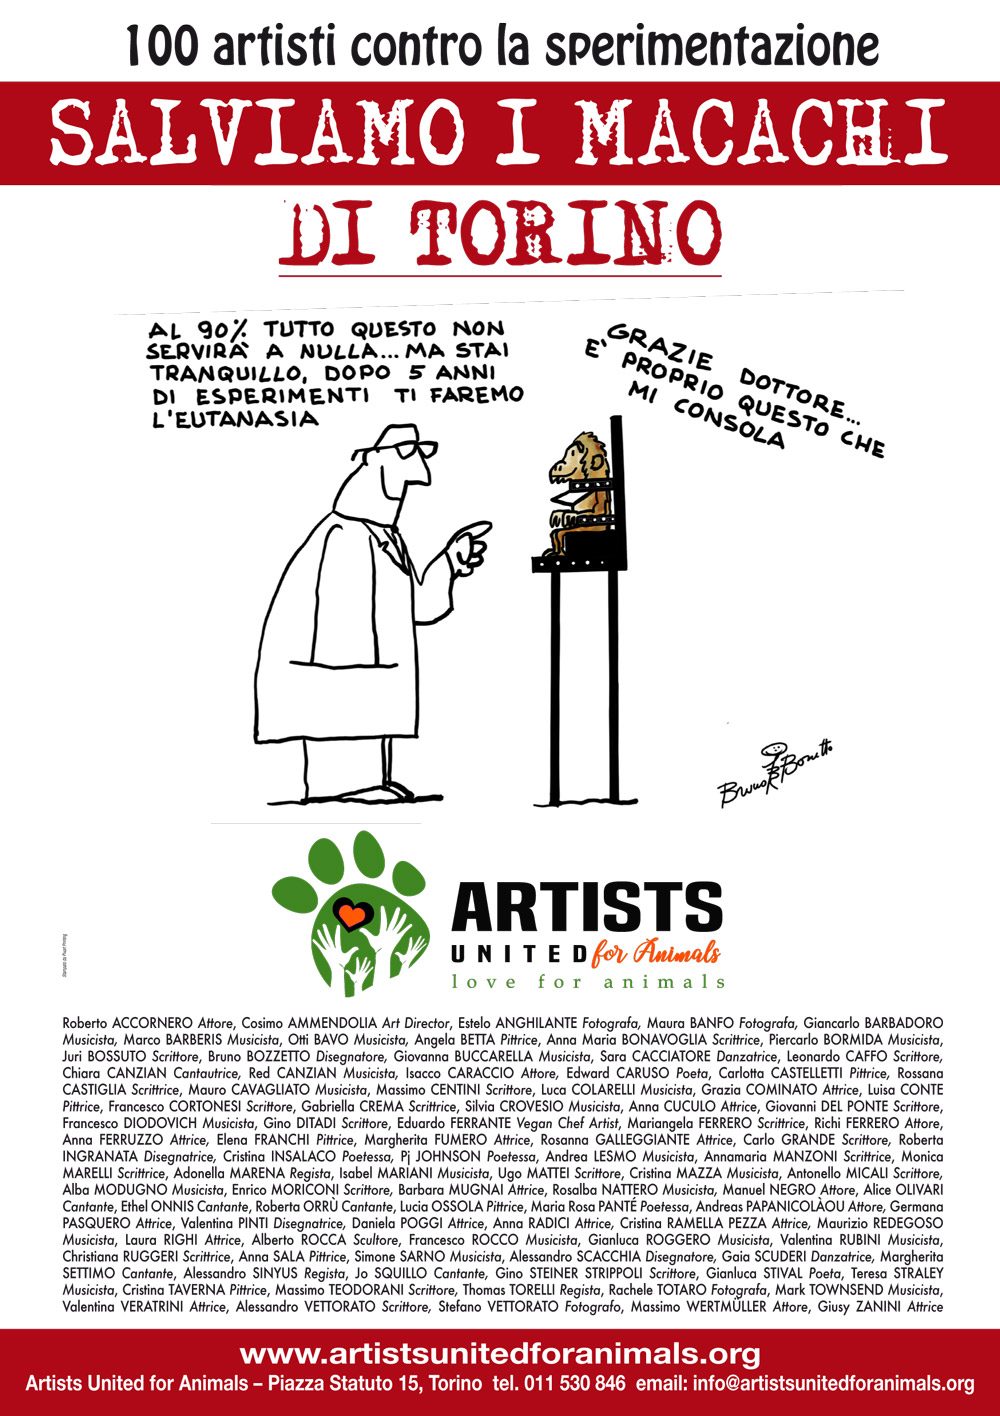 ARTISTS UNITED FOR ANIMALS - SALVIAMO I MACACHI DI TORINO